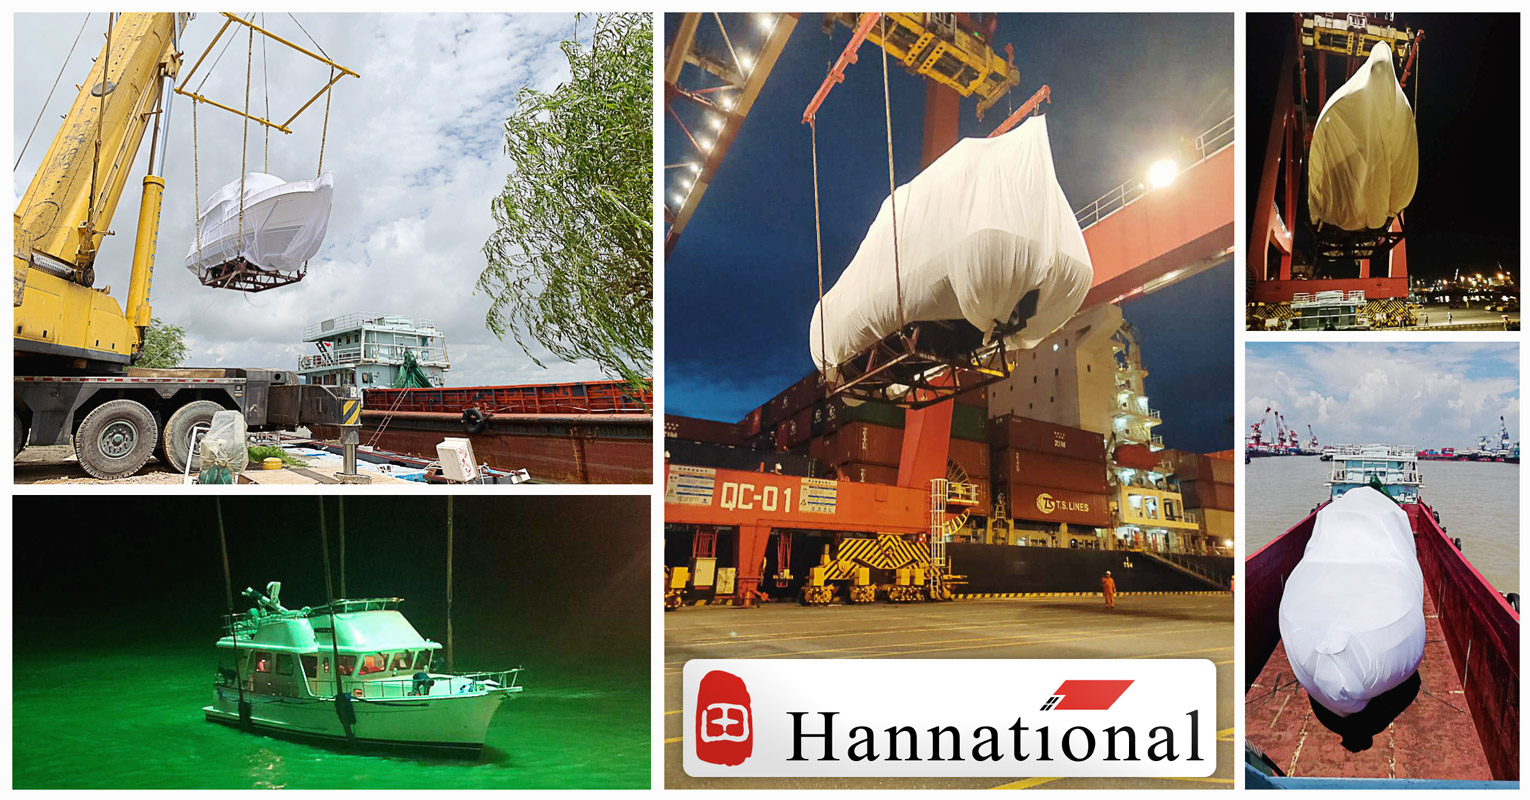 Hannational Shipping Co. Ltd. Handled One 42’ yacht ex-Guangzhou to Malaysia